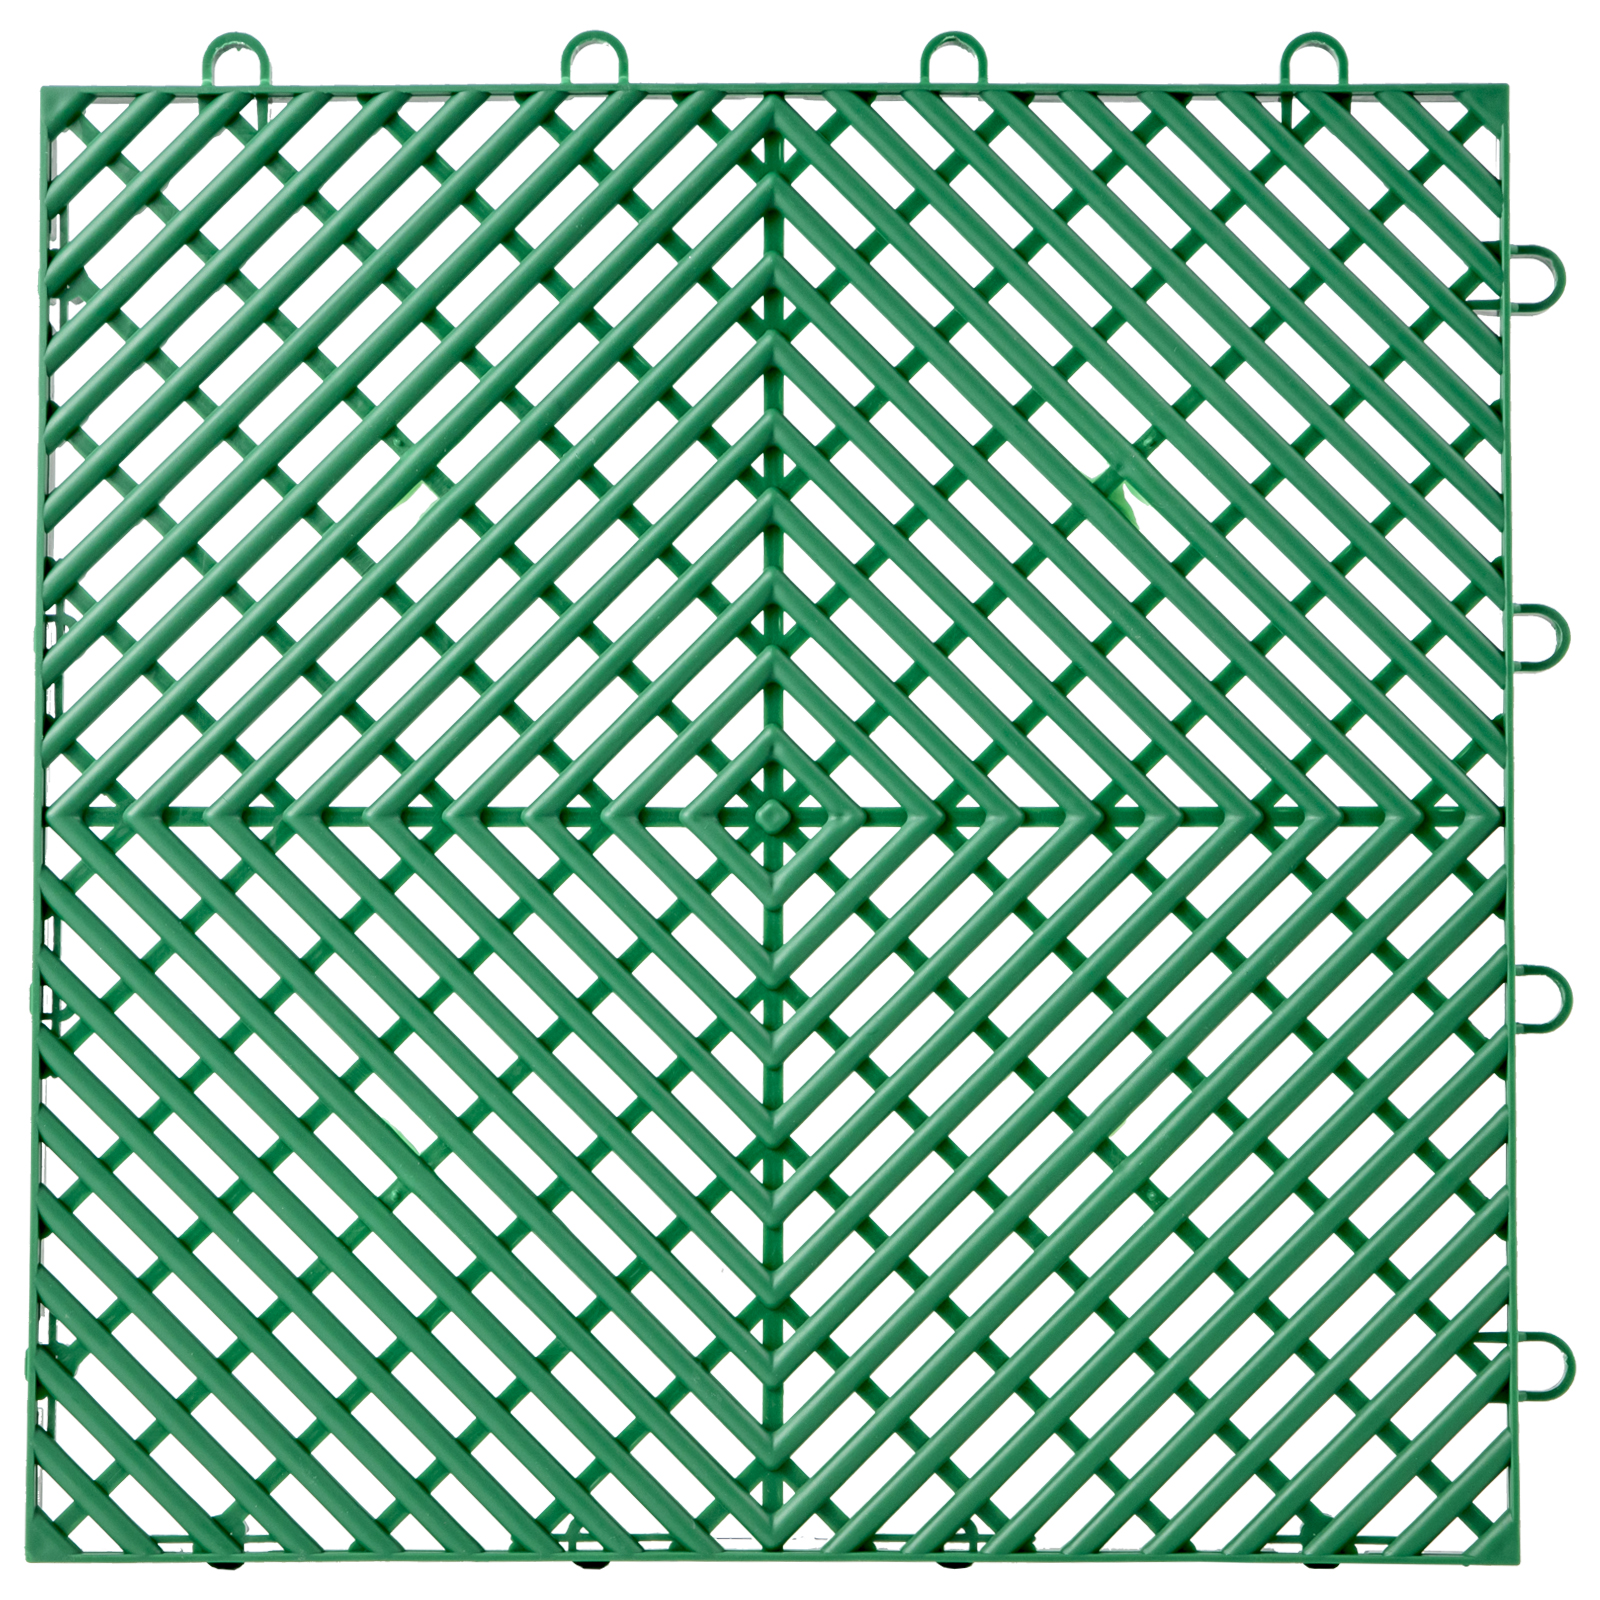 Rubber Tiles Interlocking Garage Floor Tiles 12x12x0.5inch 55pcs Deck Tile Green от Vevor Many GEOs